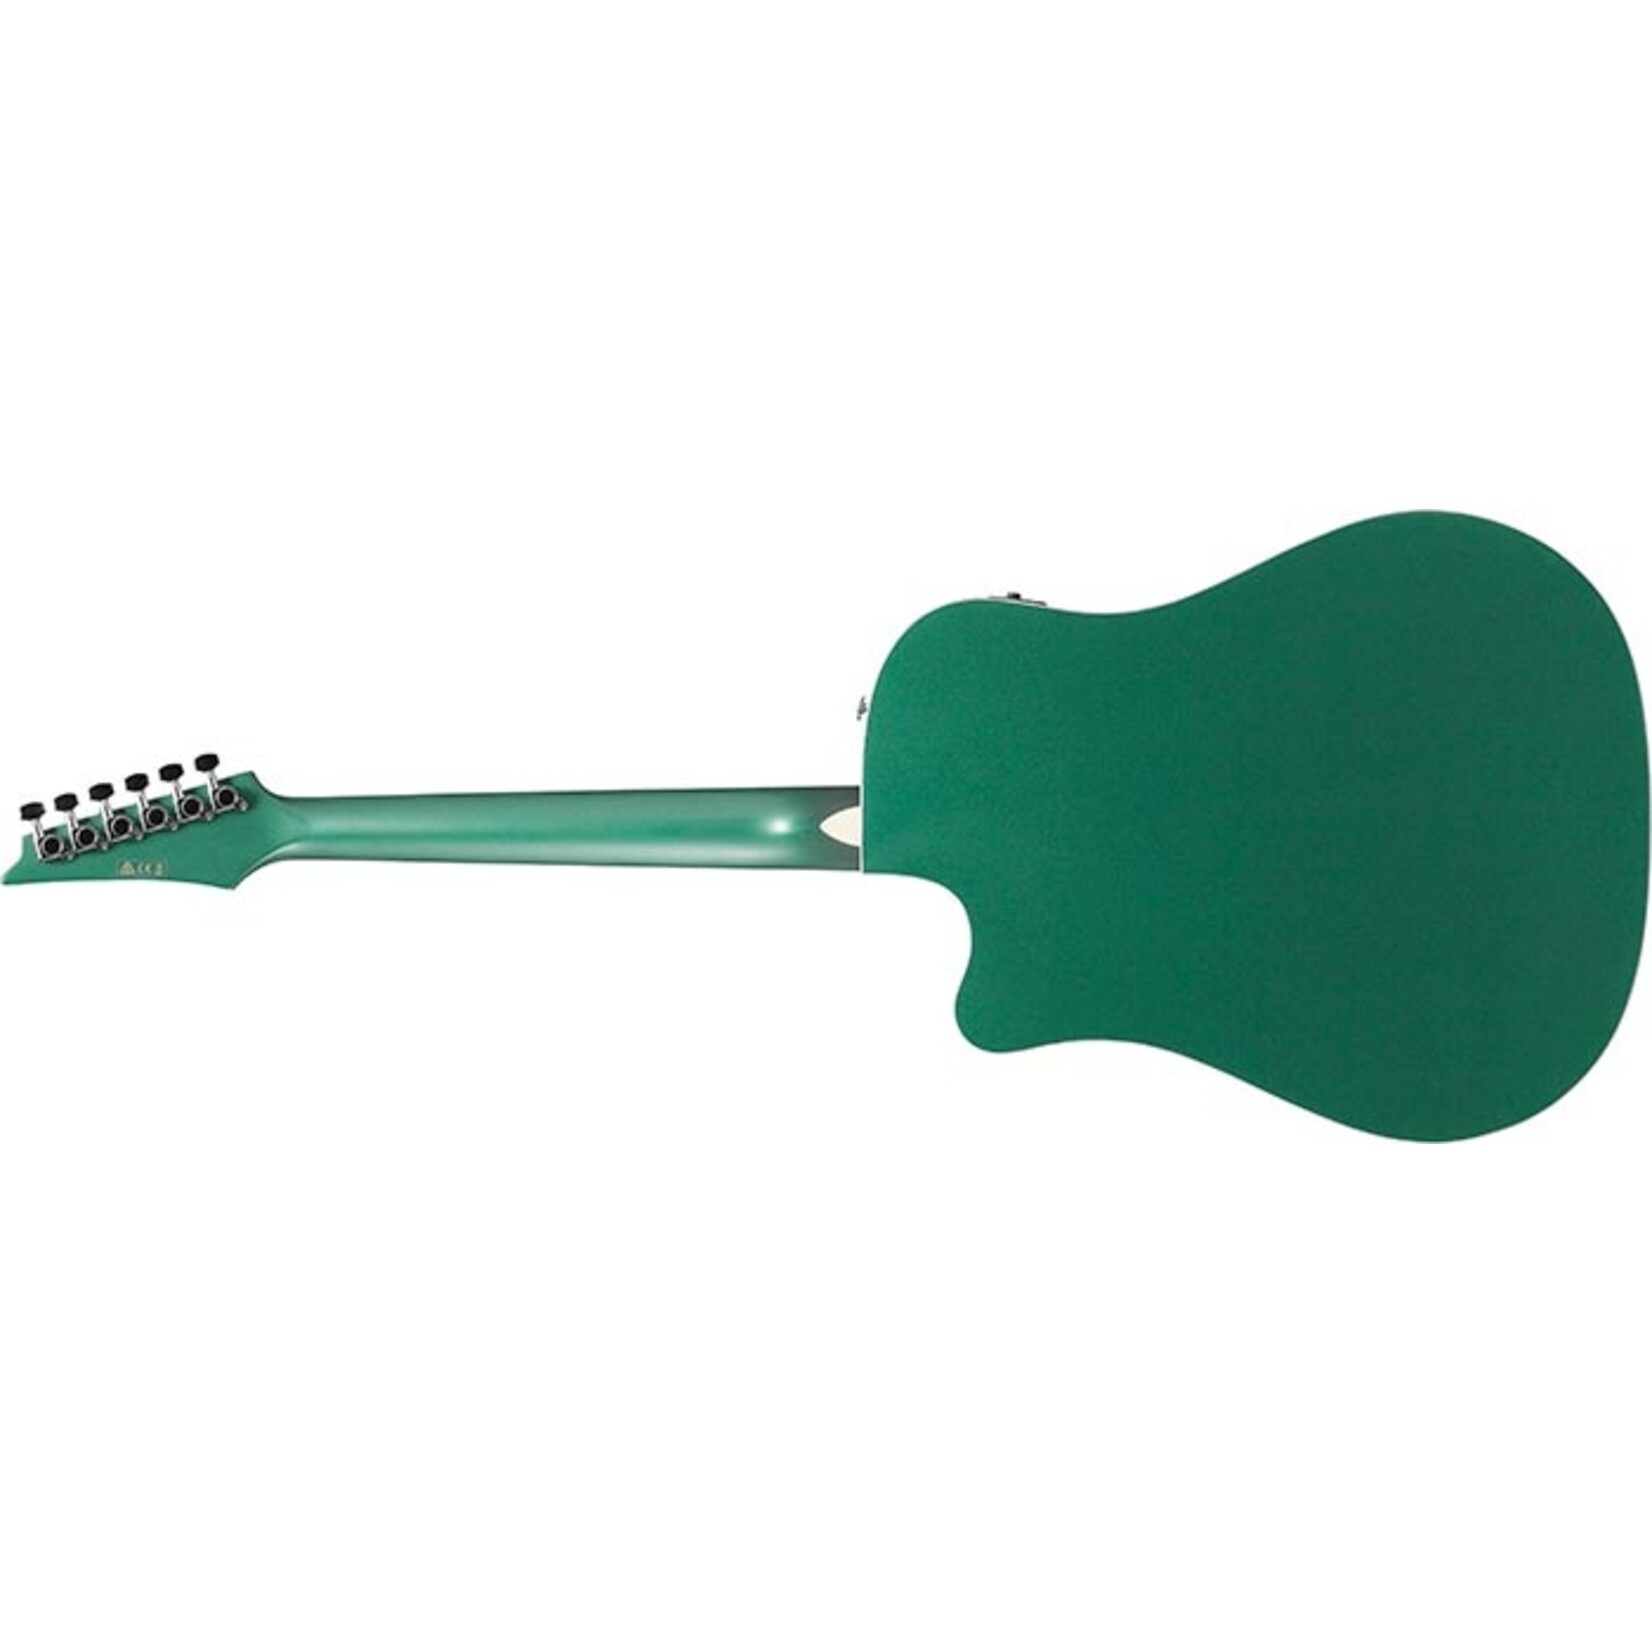 Ibanez Altstar ALT30 Acoustic-Electric Guitar - Jungle Green Metallic